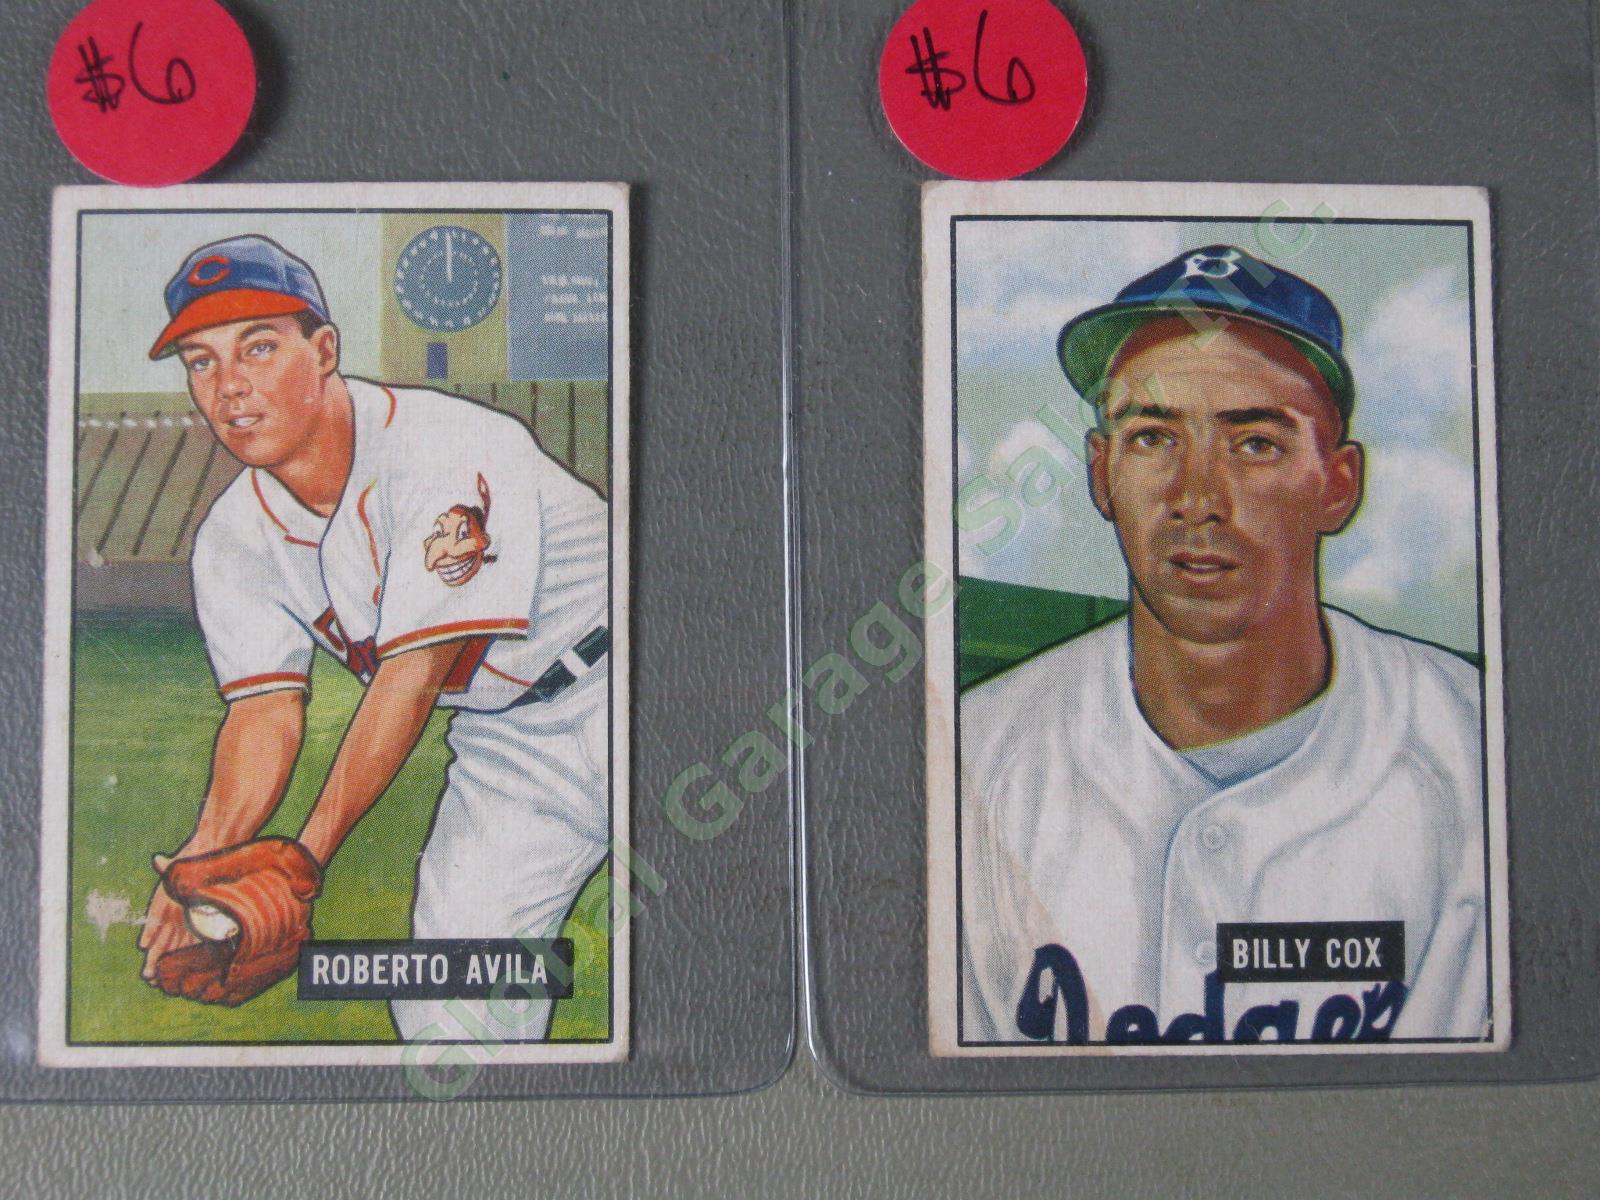 16 Bowman 1951 Baseball Card Lot w/ HOF Peewee Reese Durocher Newcombe Branca ++ 15